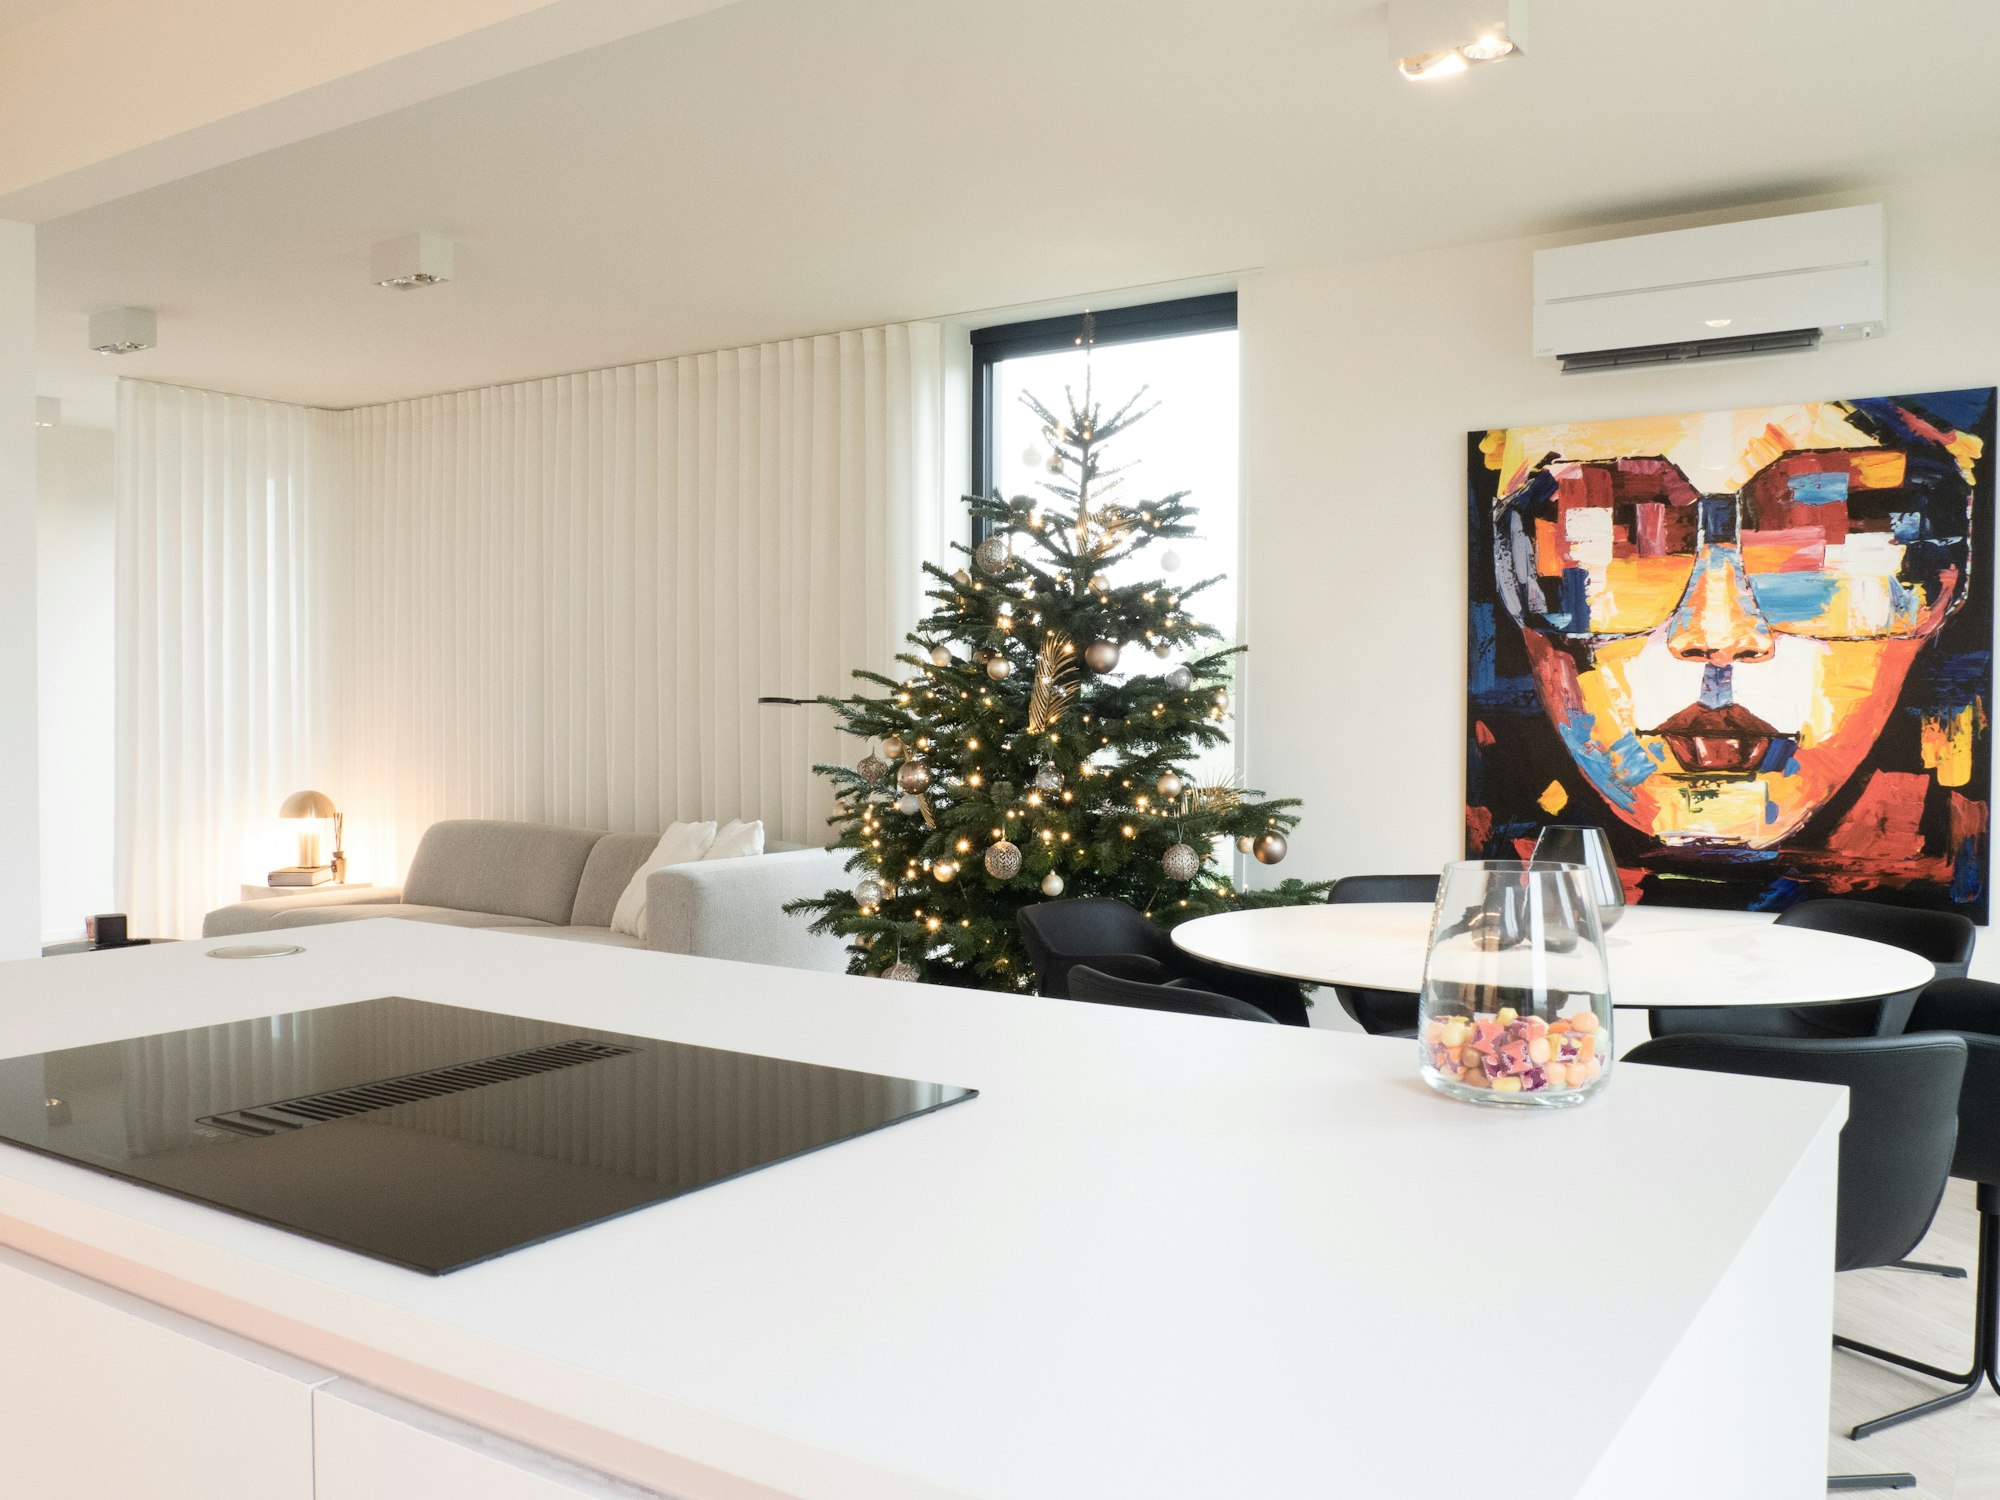 Skilpod #140 - interieur woonkamer en eetruimte,  modern design met kerstboom